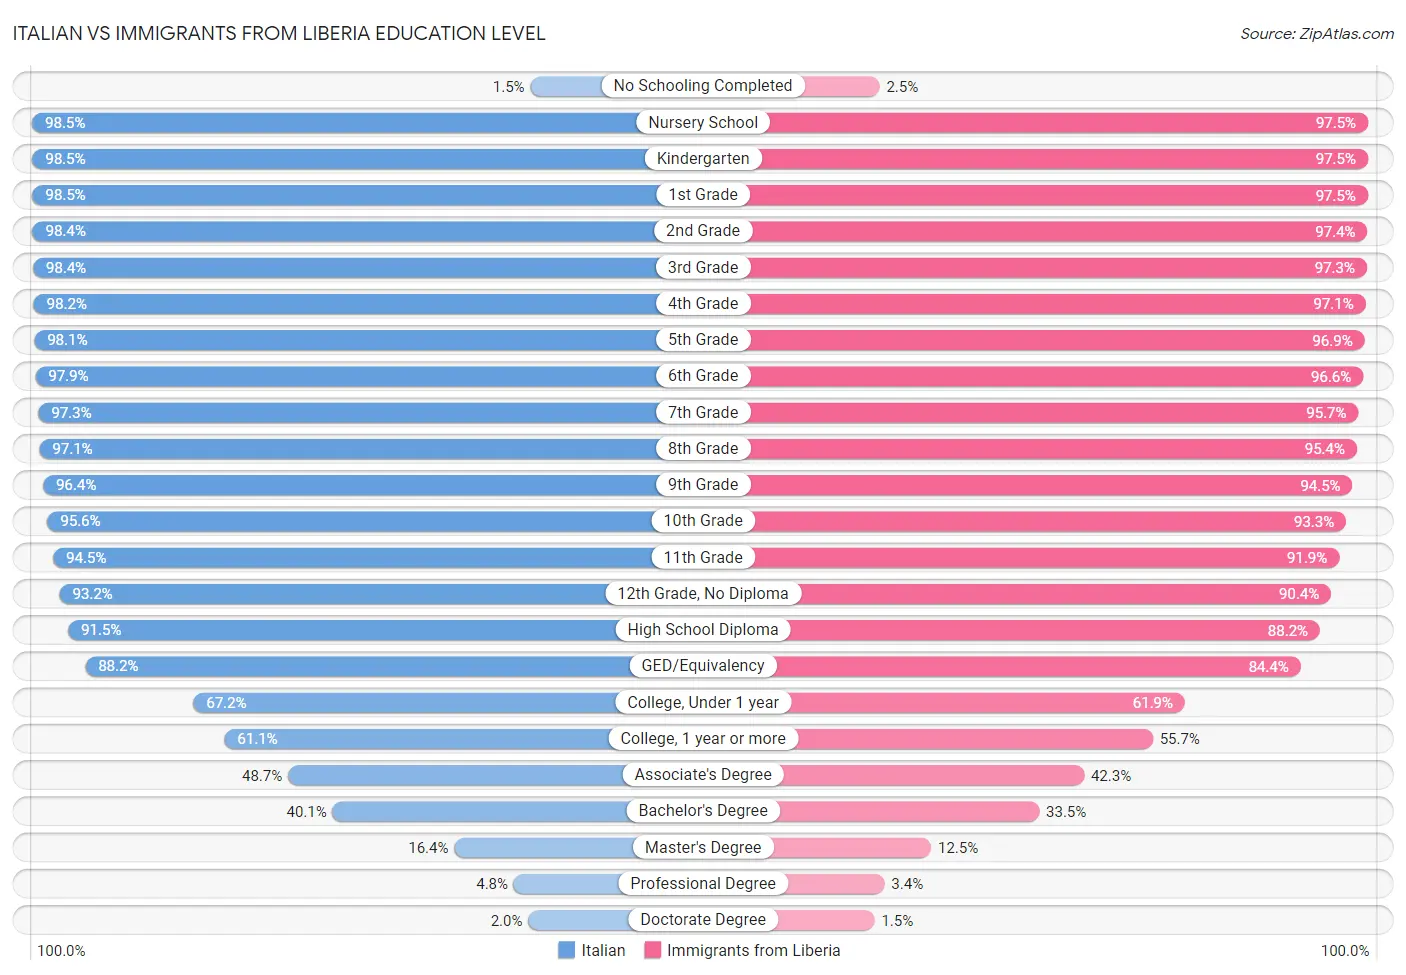 Italian vs Immigrants from Liberia Education Level